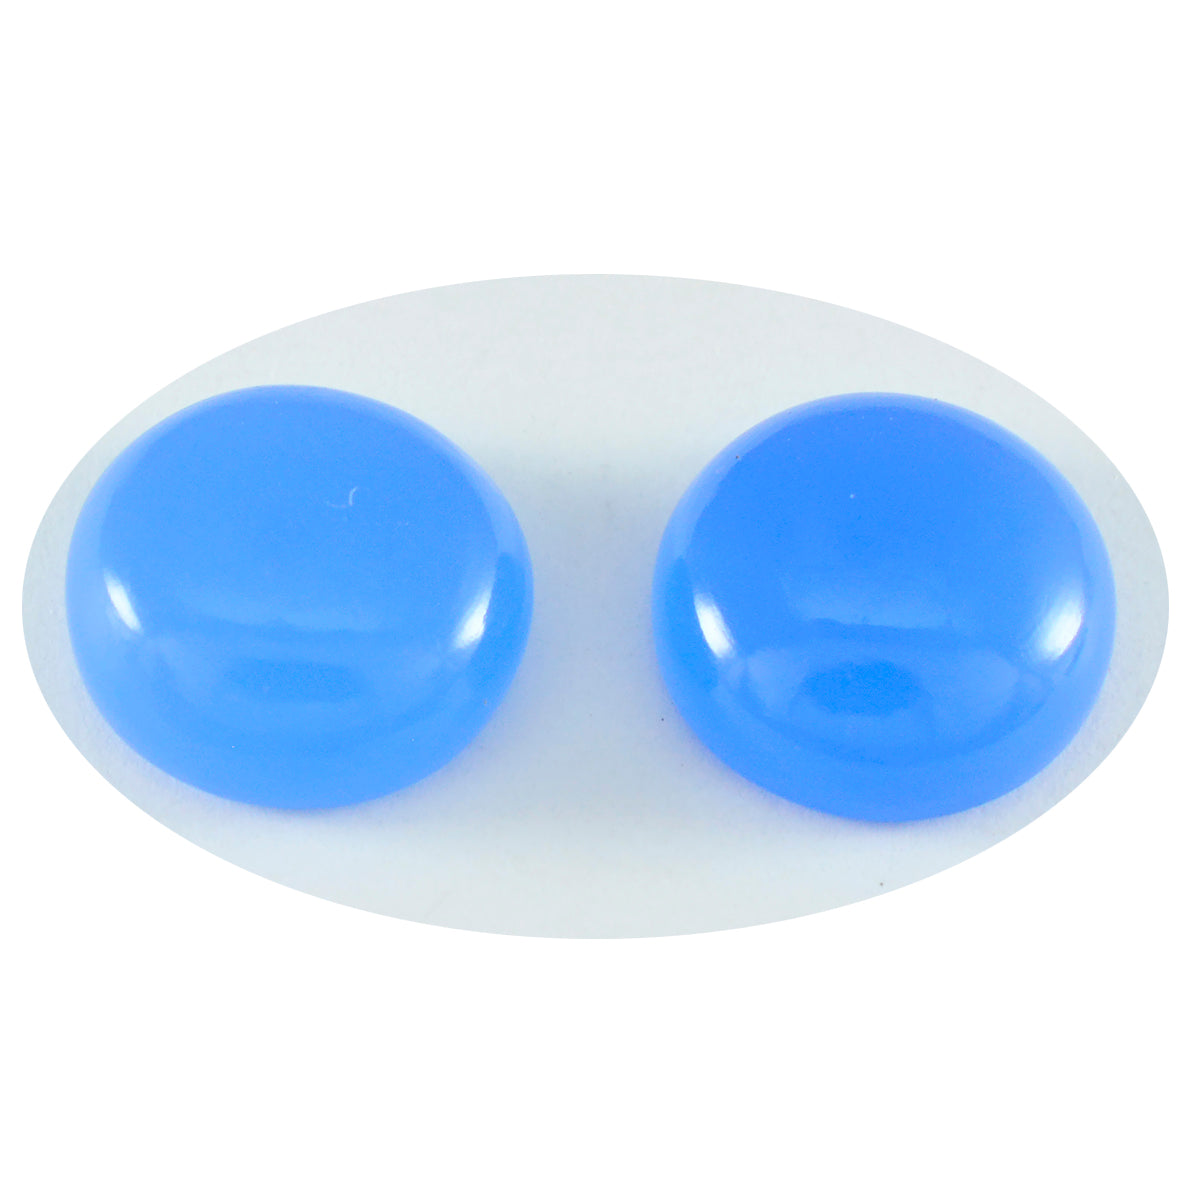 riyogems 1 st blå kalcedon cabochon 9x9 mm rund form attraktiv kvalitet lös pärla